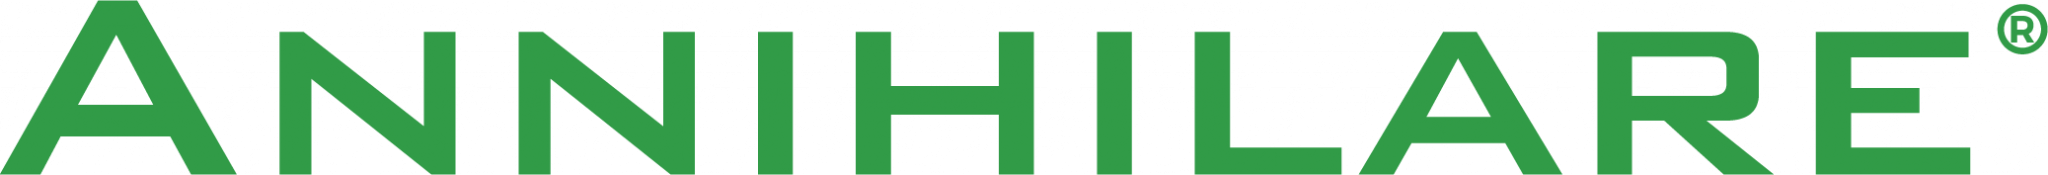 Annihilare - logo image